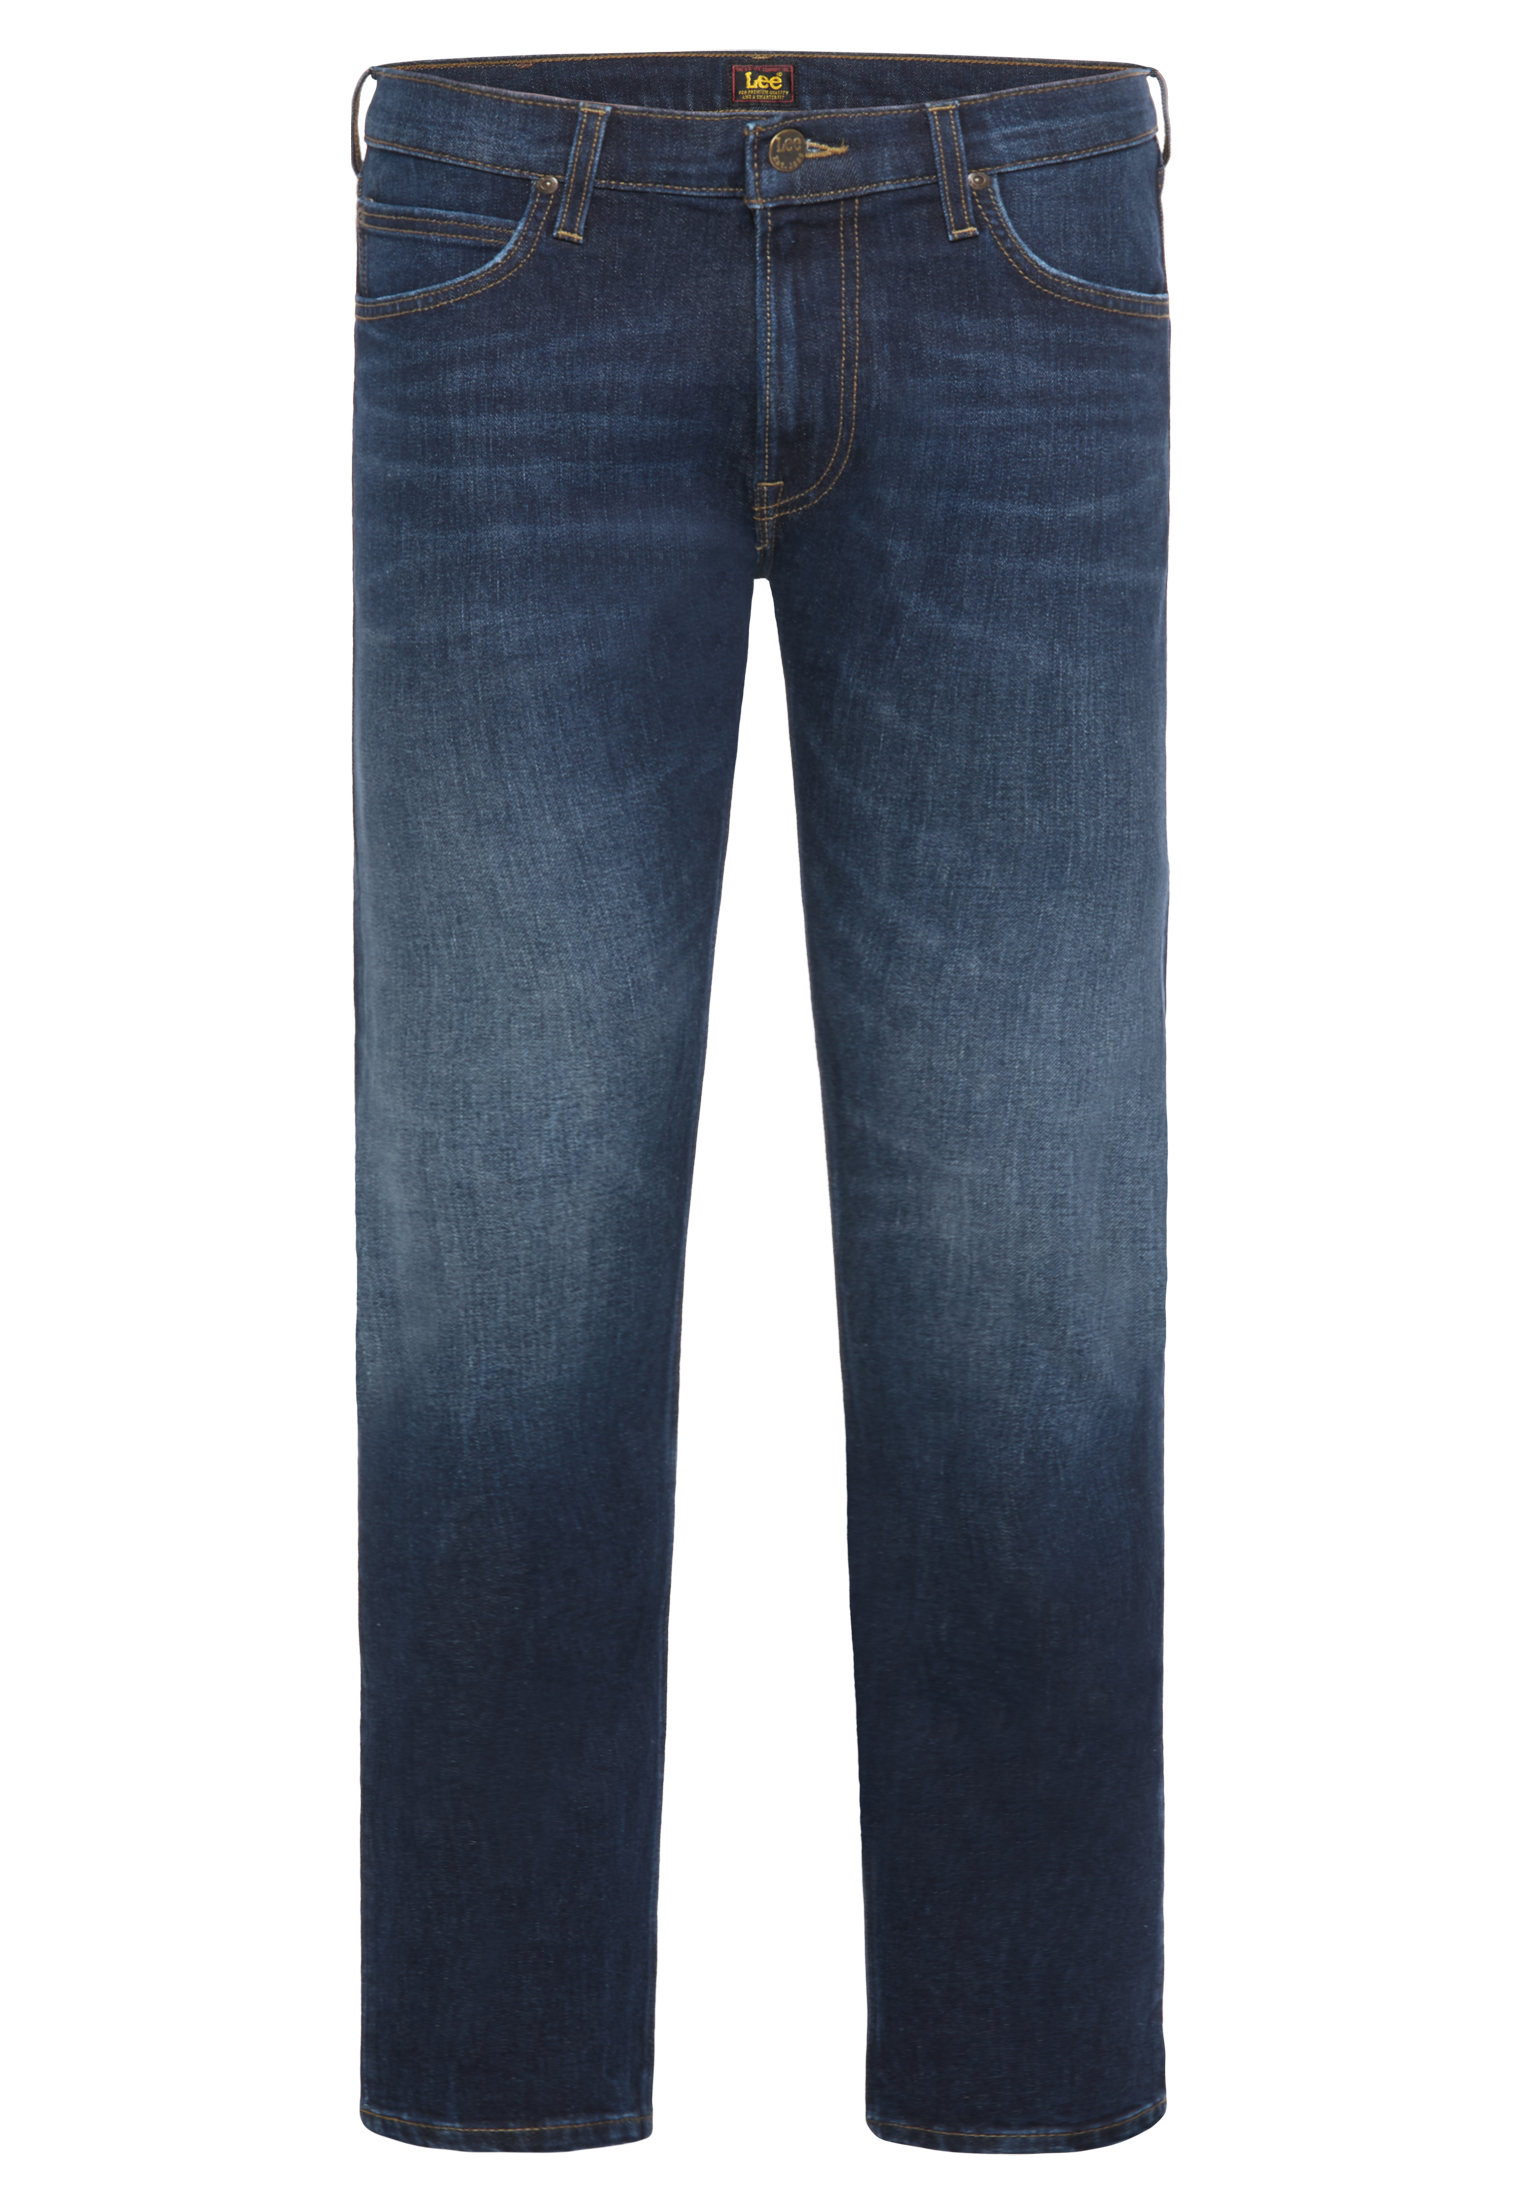 Granatowe jeansy Lee Wrangler